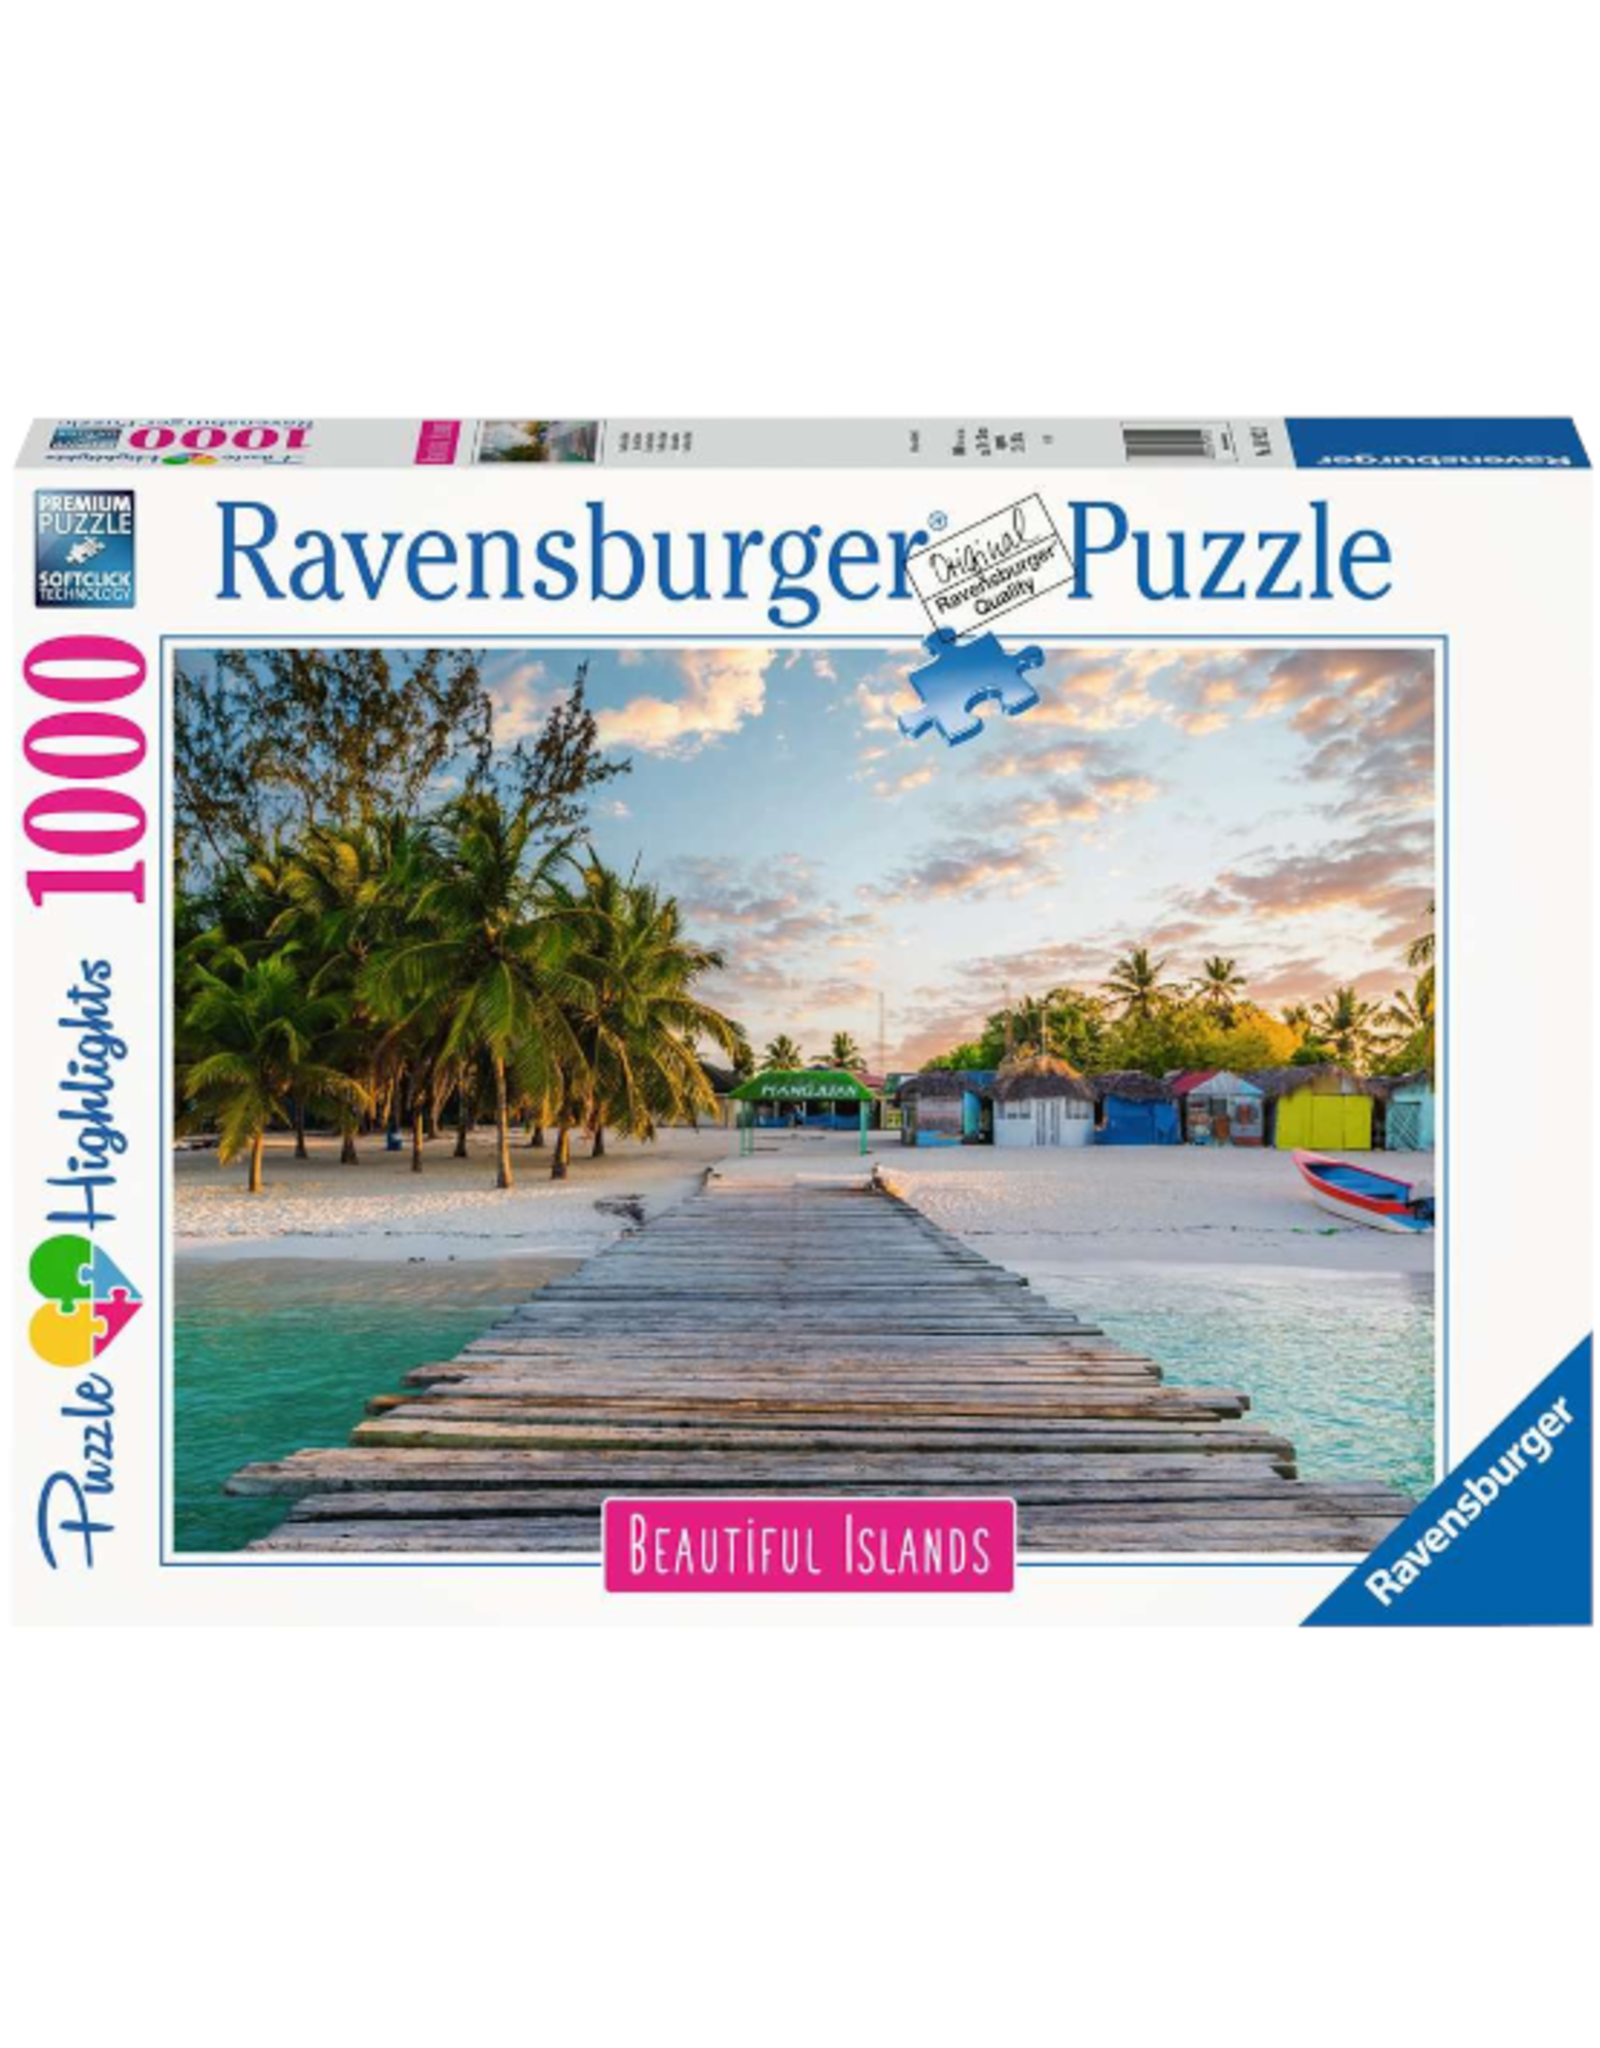 Ravensburger Ravensburger - 1000pcs - Puzzle Highlights Beautiful Islands:  Maldives Paradise